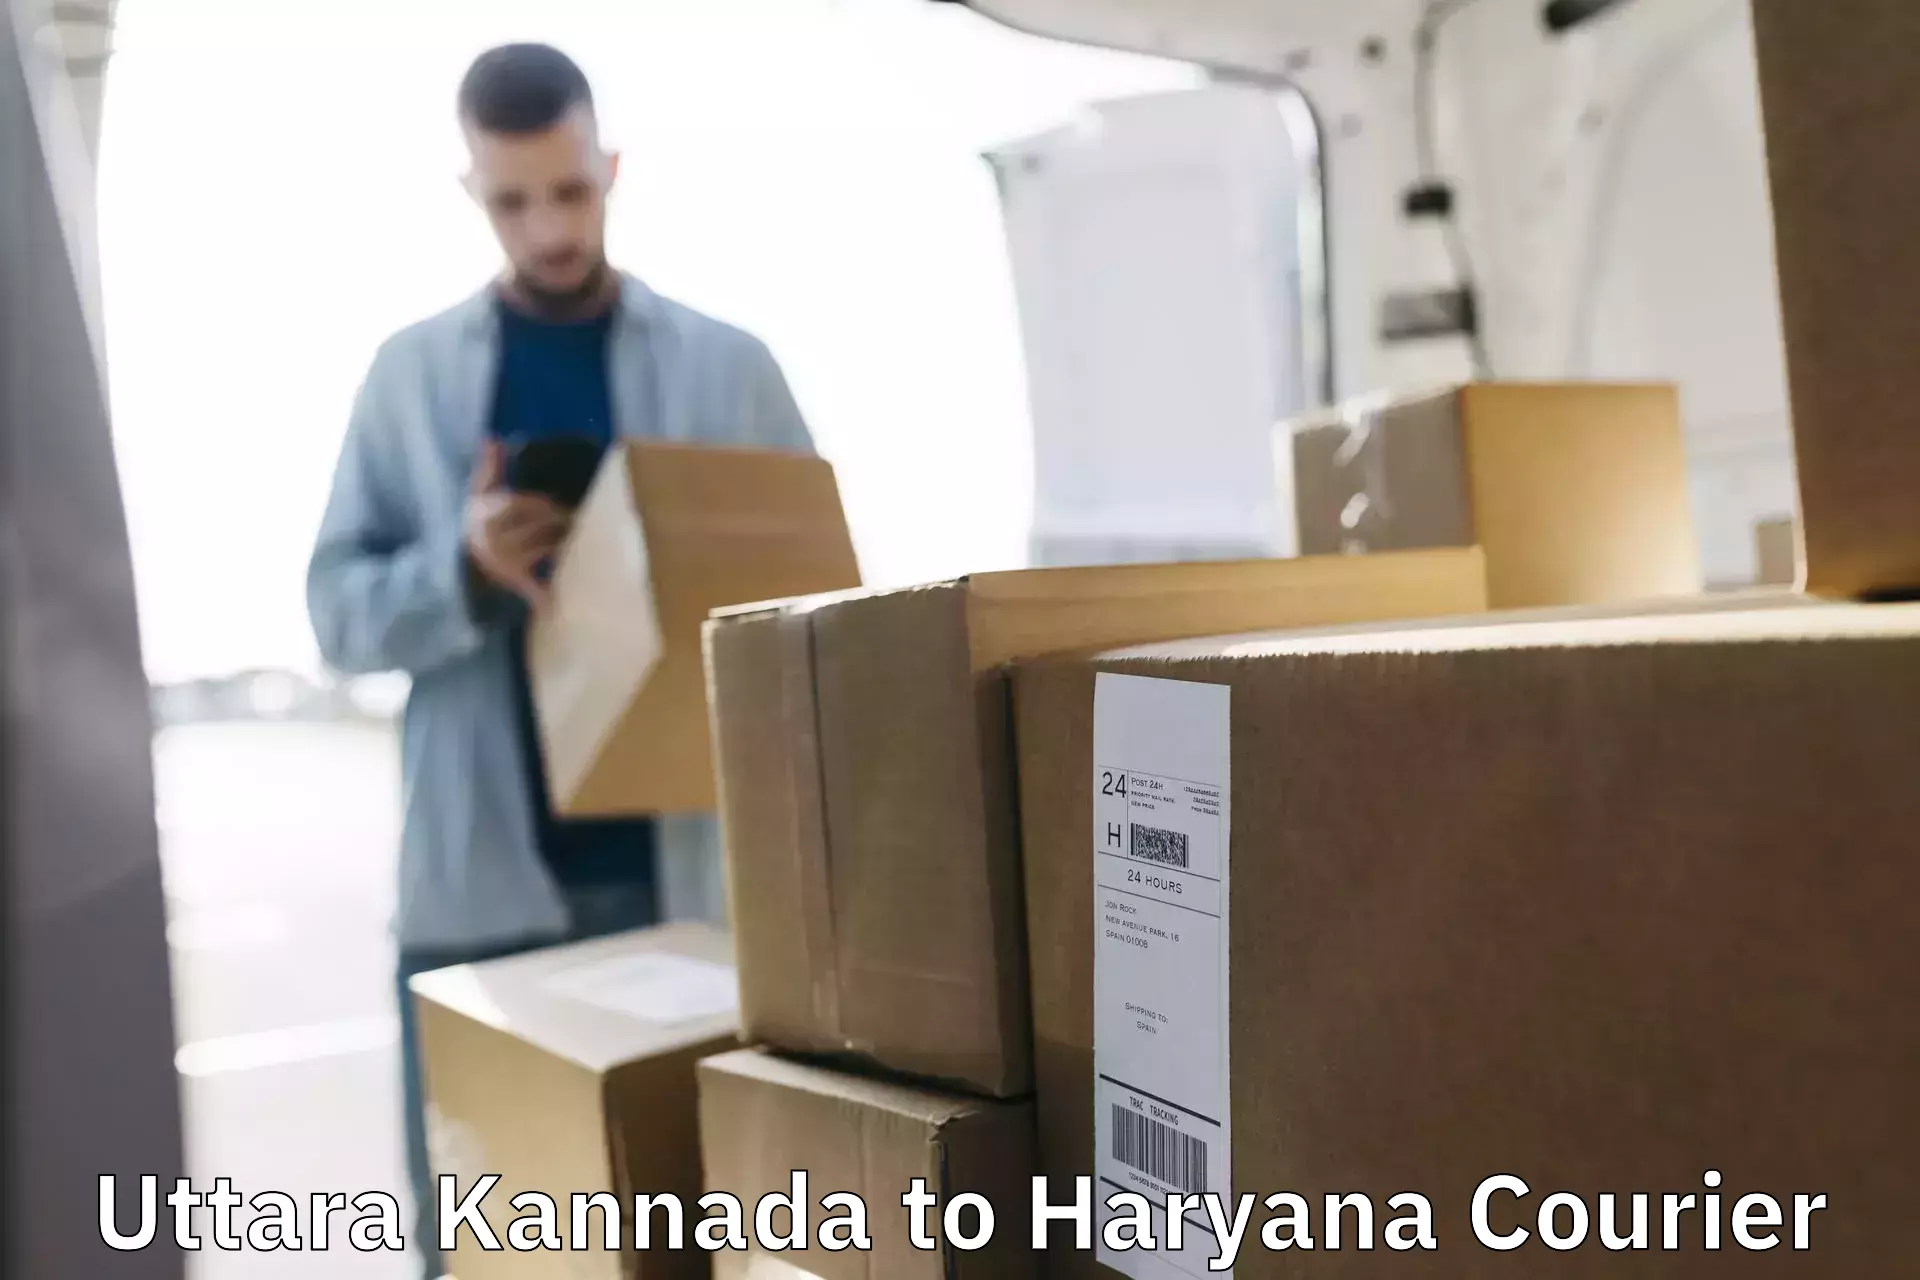 Courier service comparison Uttara Kannada to Chandi Rohtak